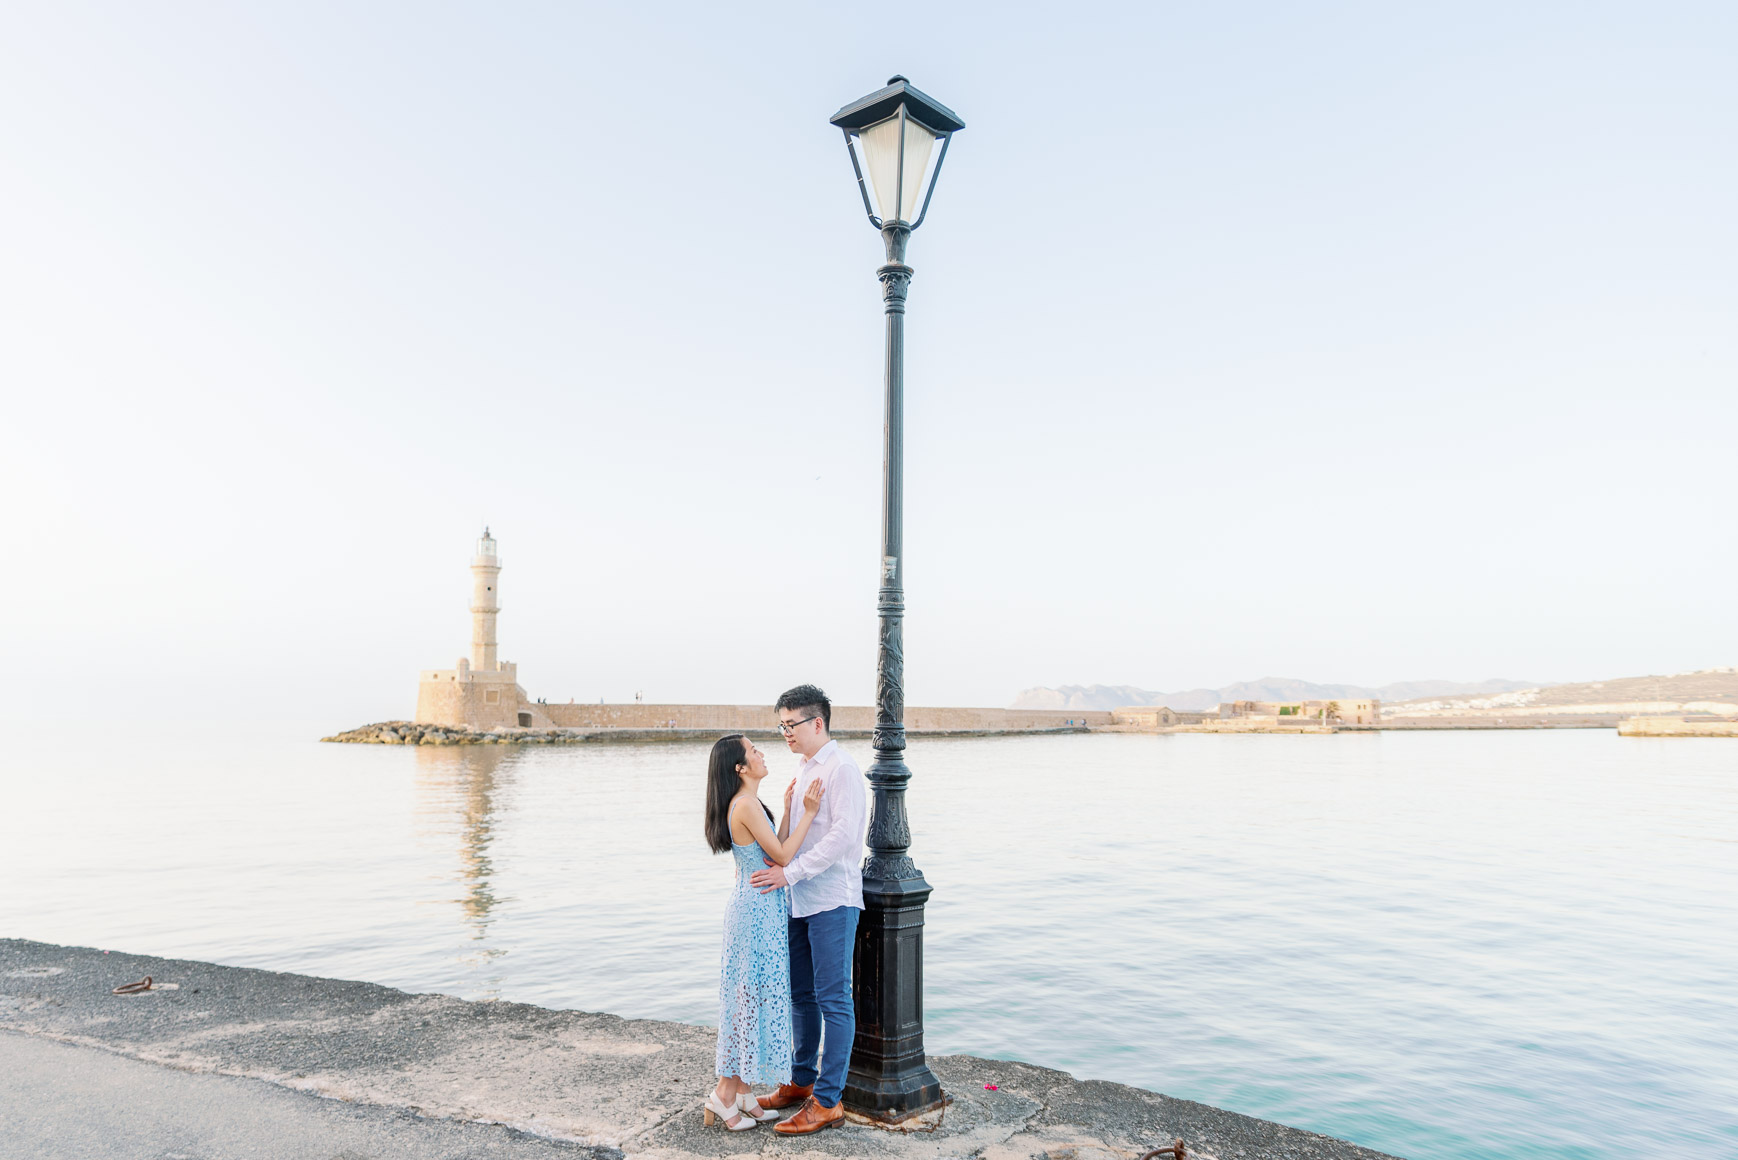 Dimitris - Psillakis - Photography - Santorini - Crete - Chania - Mykonos photographer - Wedding -  Elopement - Honeymoon - Engagement - Proposal Greek photographer- in Santorini and Crete